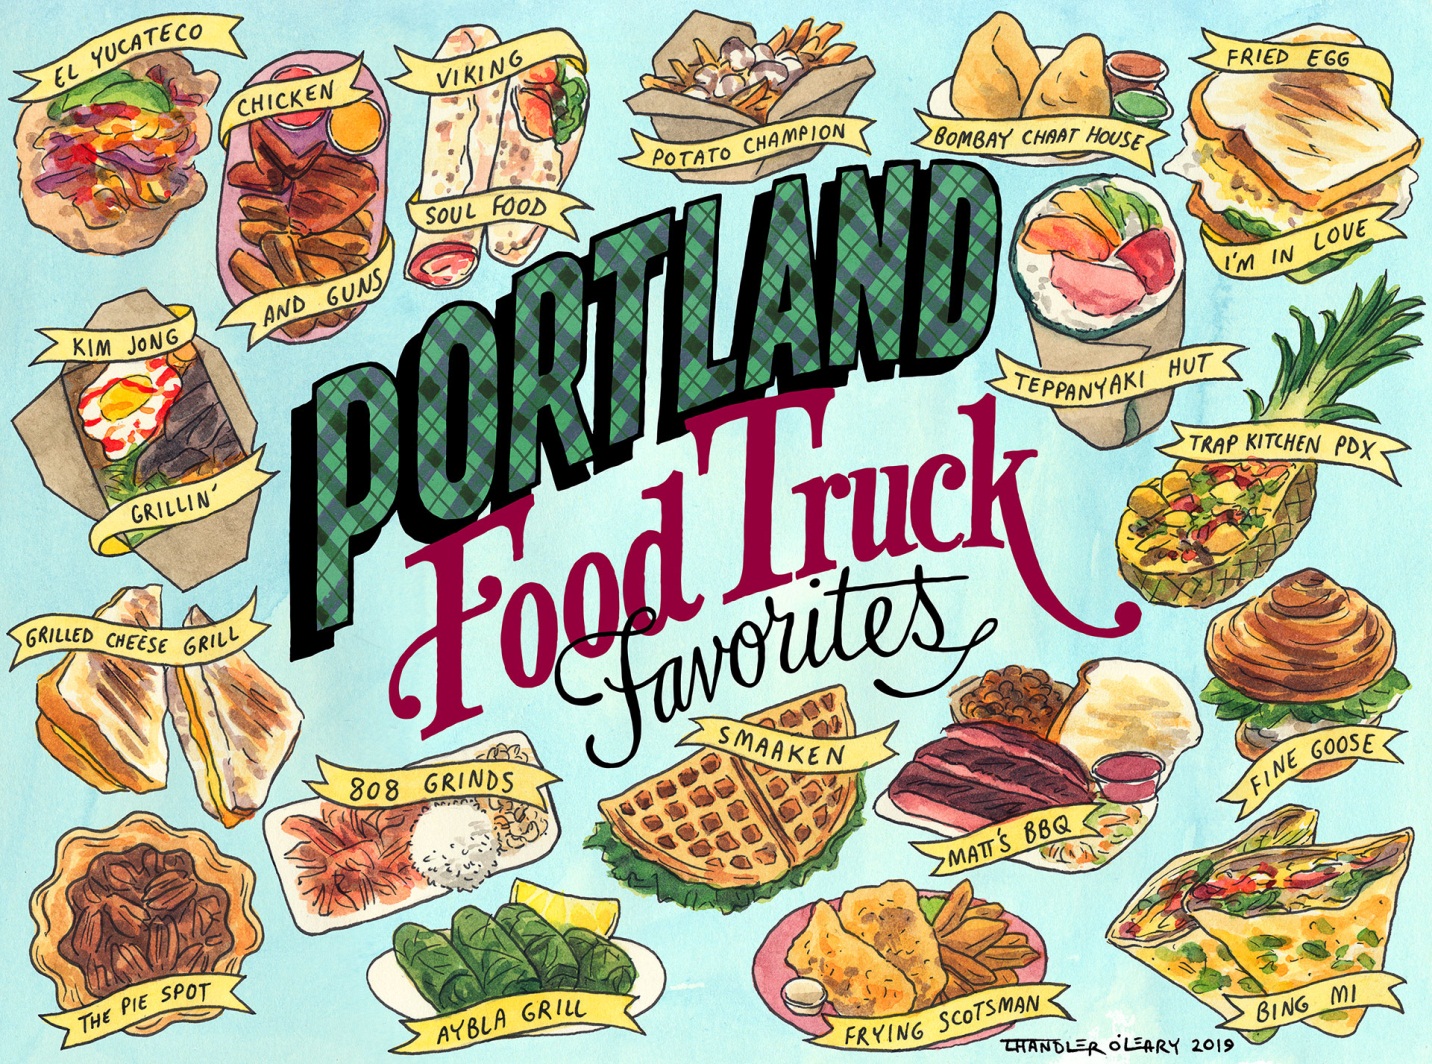 Portland Food Truck Favorites